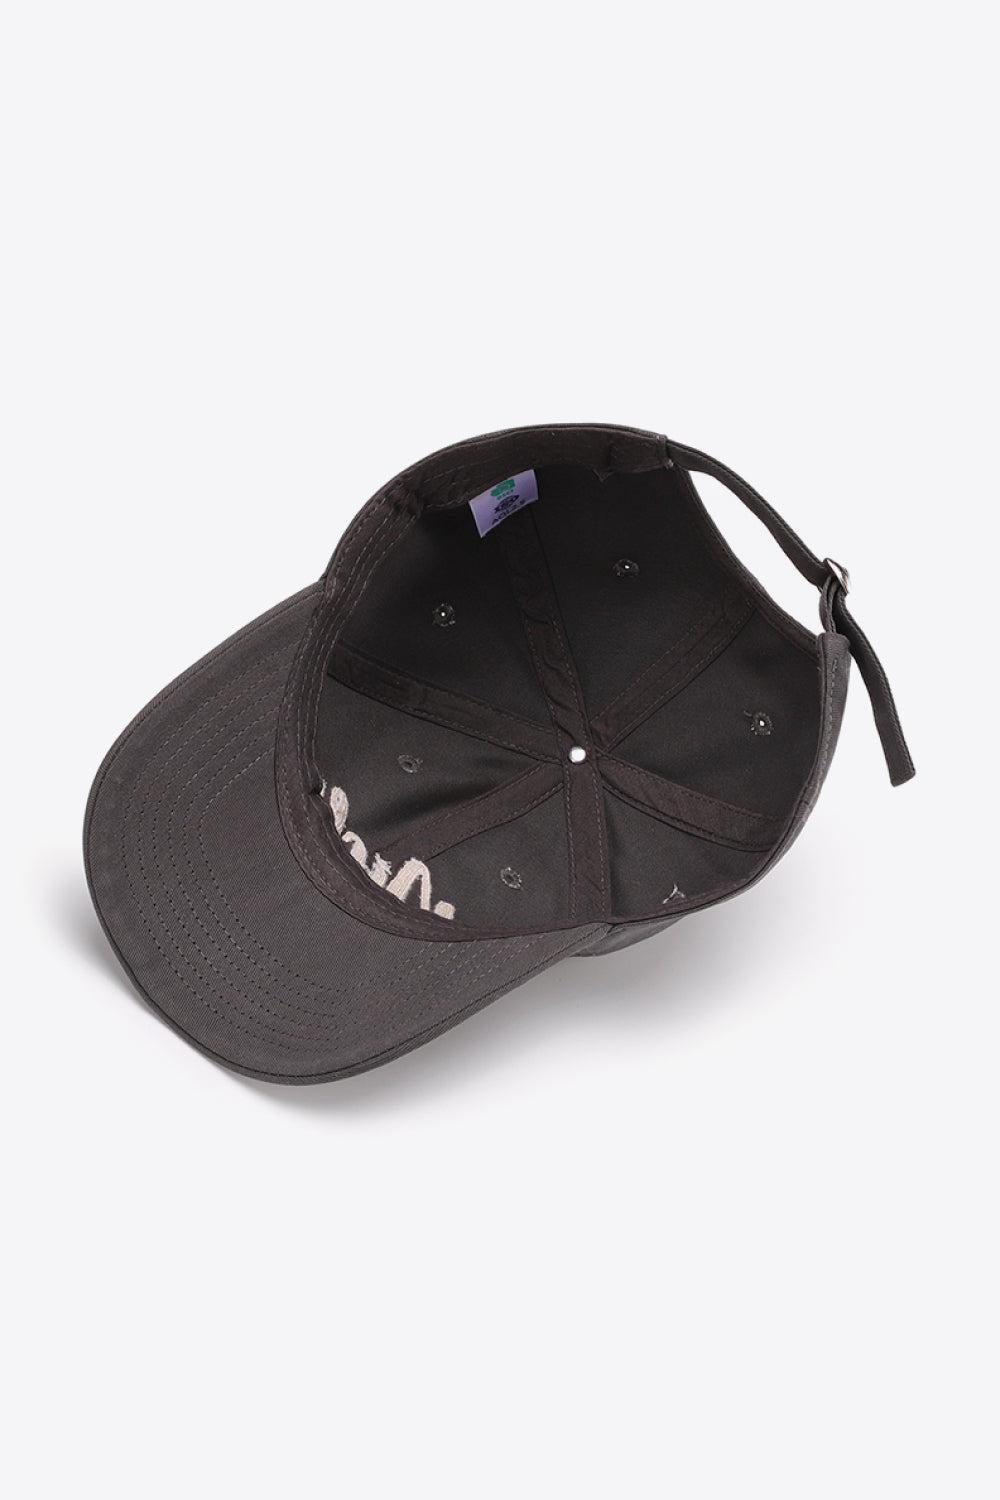 NICE Adjustable Cotton Baseball Cap-HATS-[Adult]-[Female]-2022 Online Blue Zone Planet